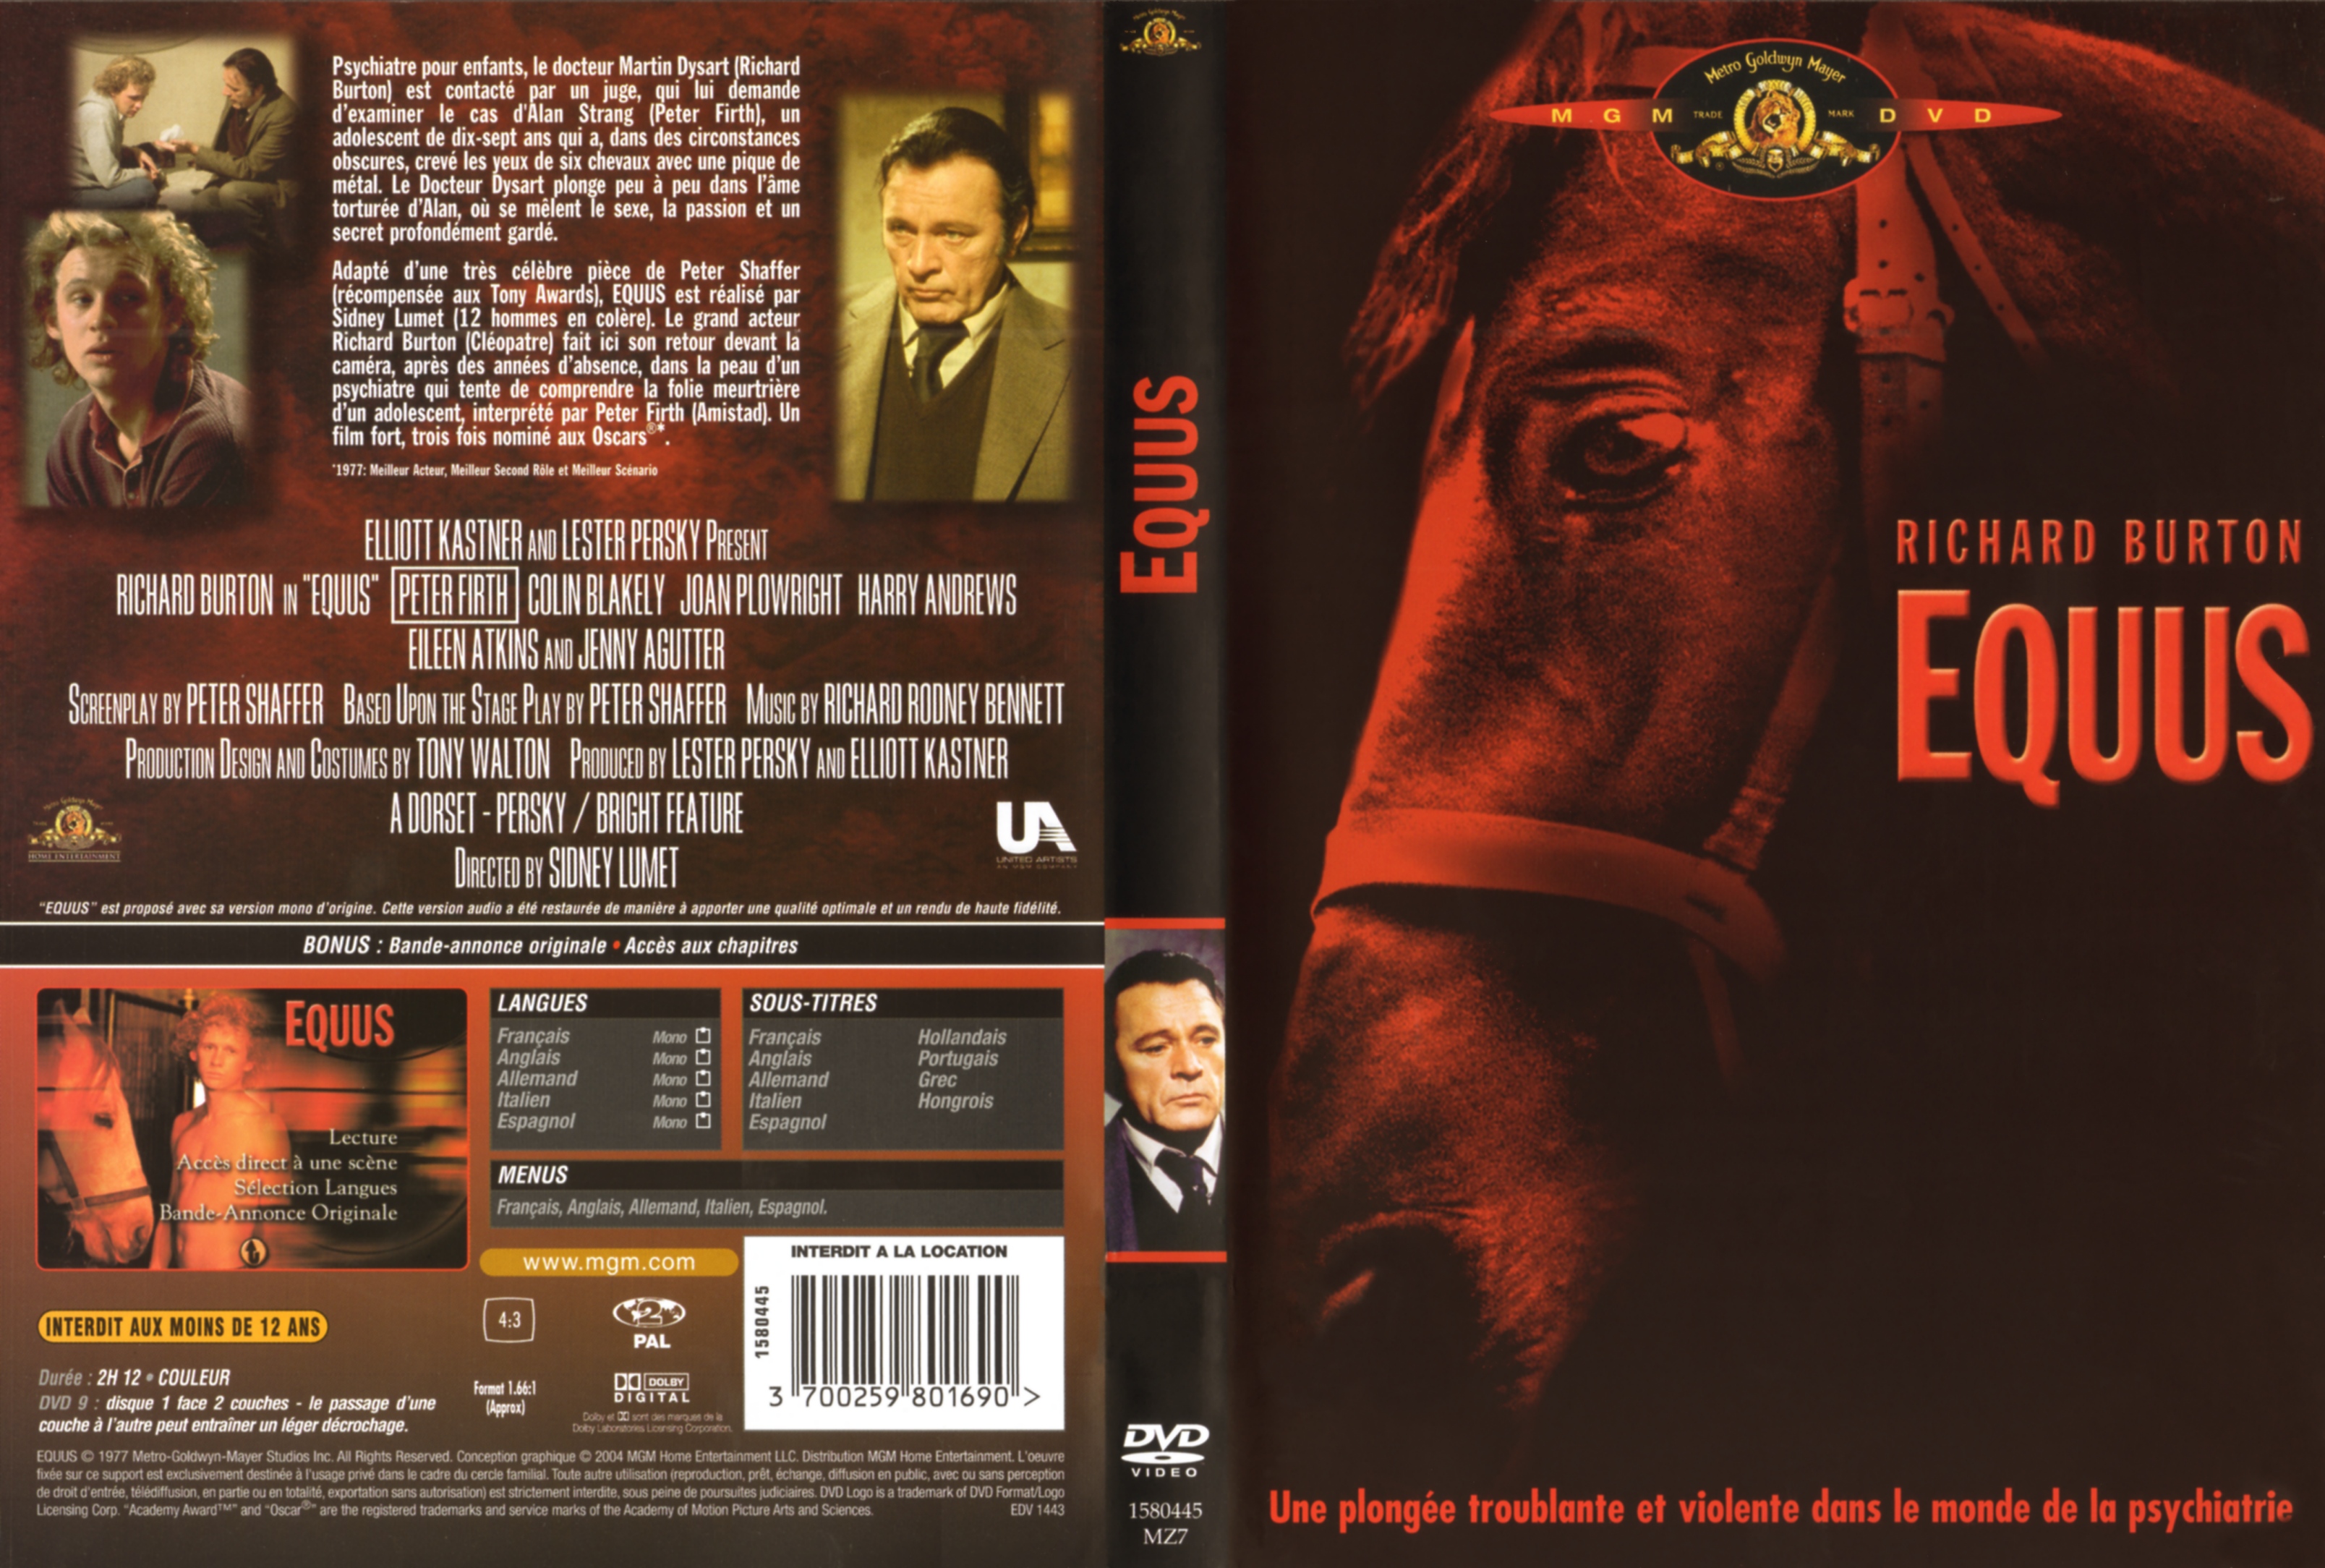 Jaquette DVD Equus v2